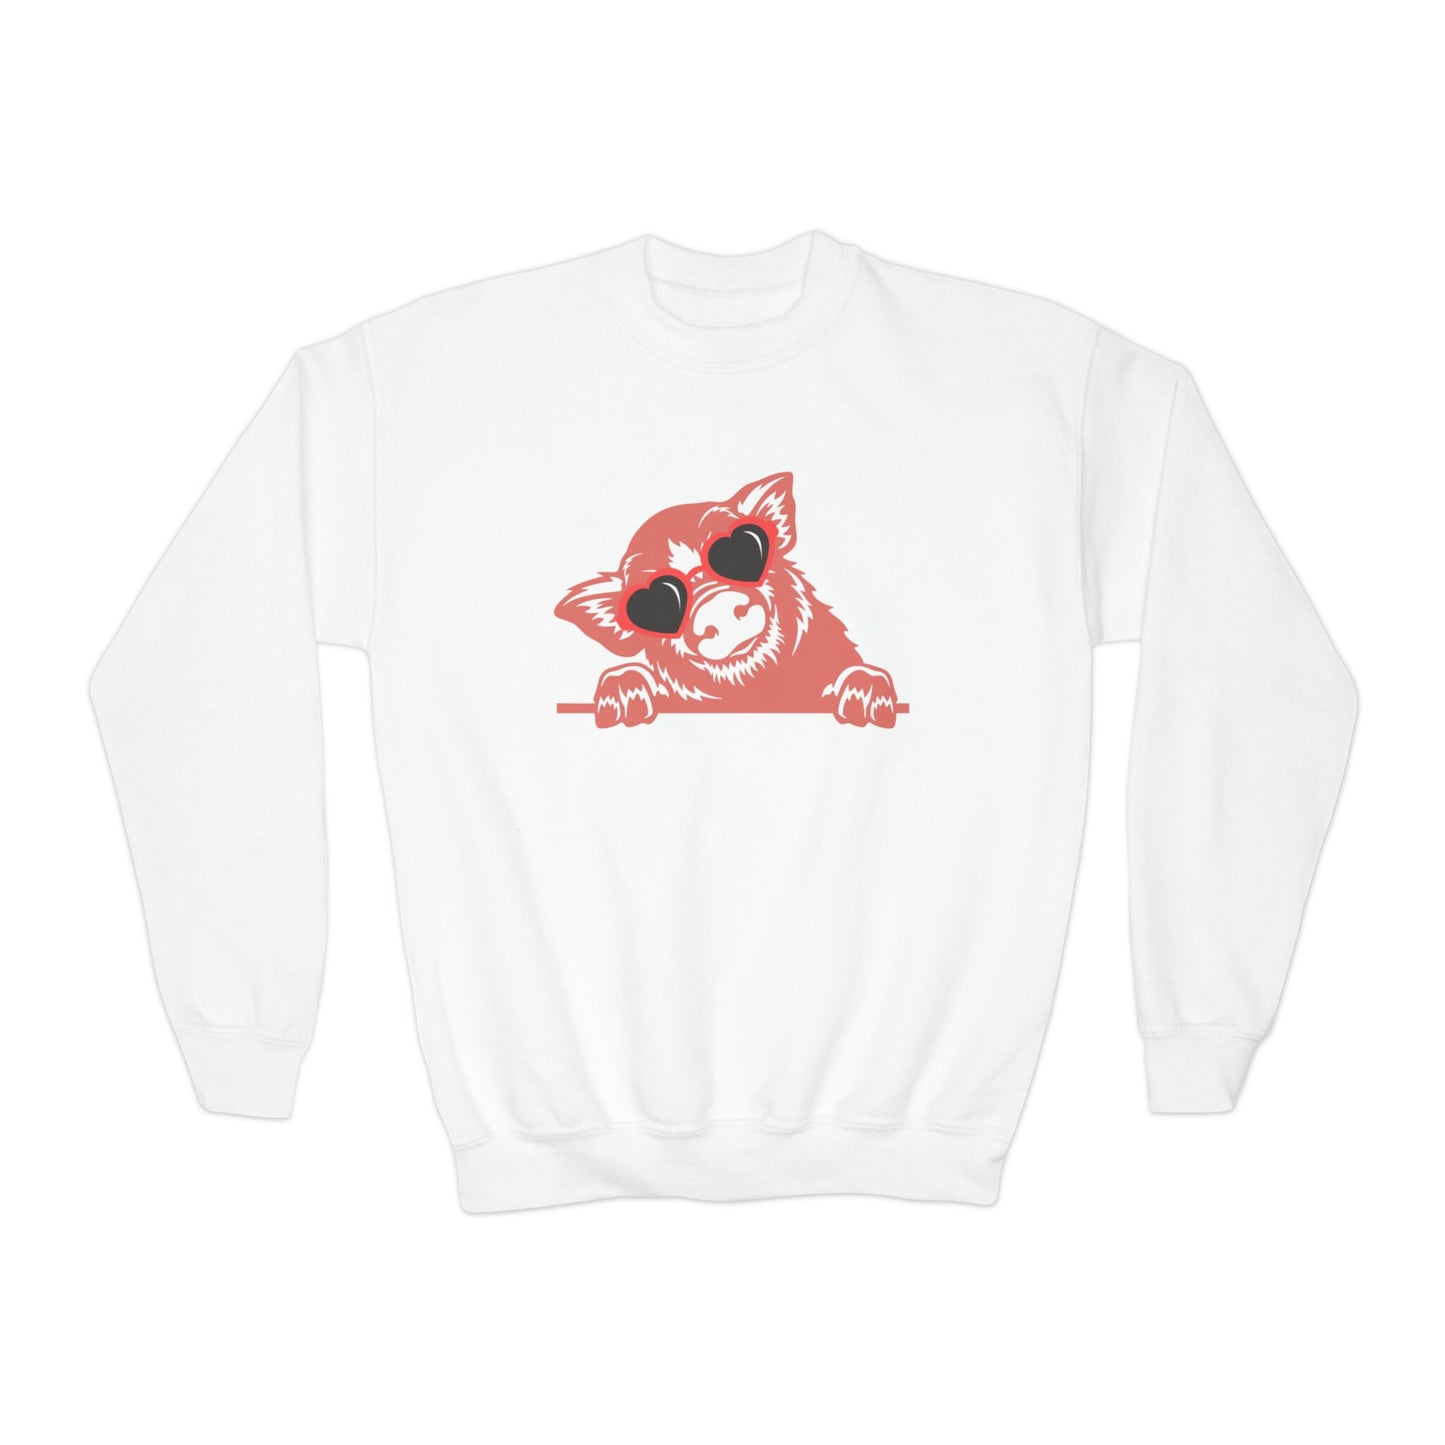 Heart Glasses Pig Youth Sweatshirt, Cute Pig Sweatshirt, 90s Mom Shirts For Women, Pig Lover Gifts, Simple Pig Hoodies For Wom